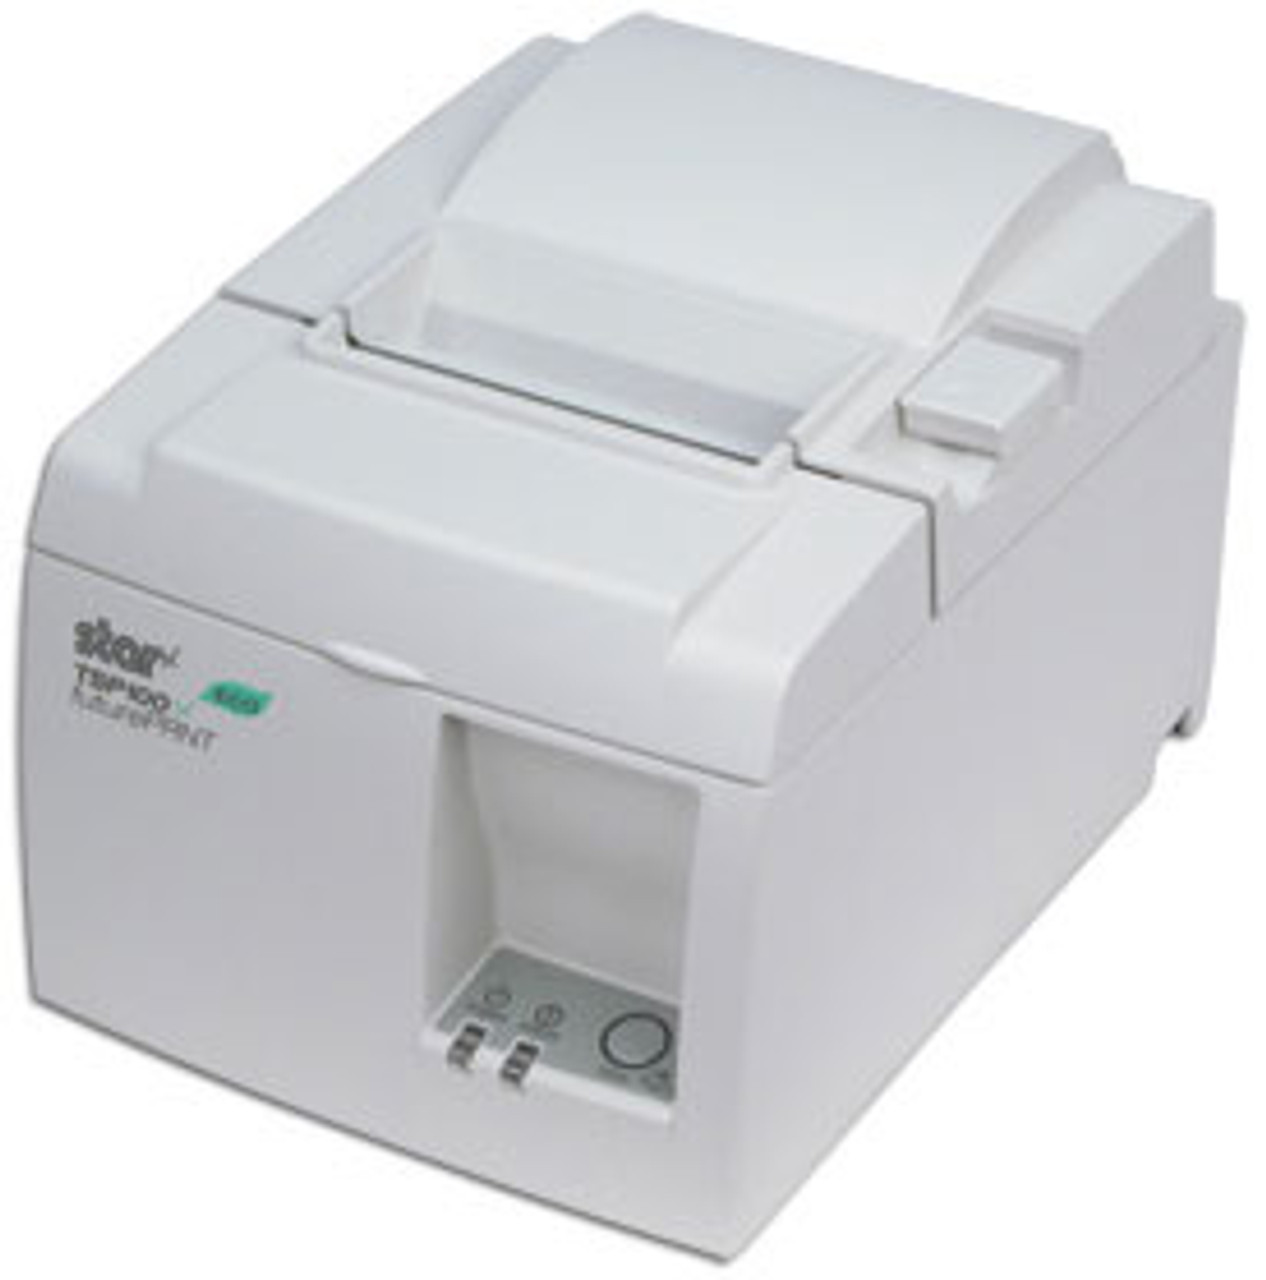 STAR TSP100 / TSP143 imprimante de reçus - BYPOS-1033 Acheter en